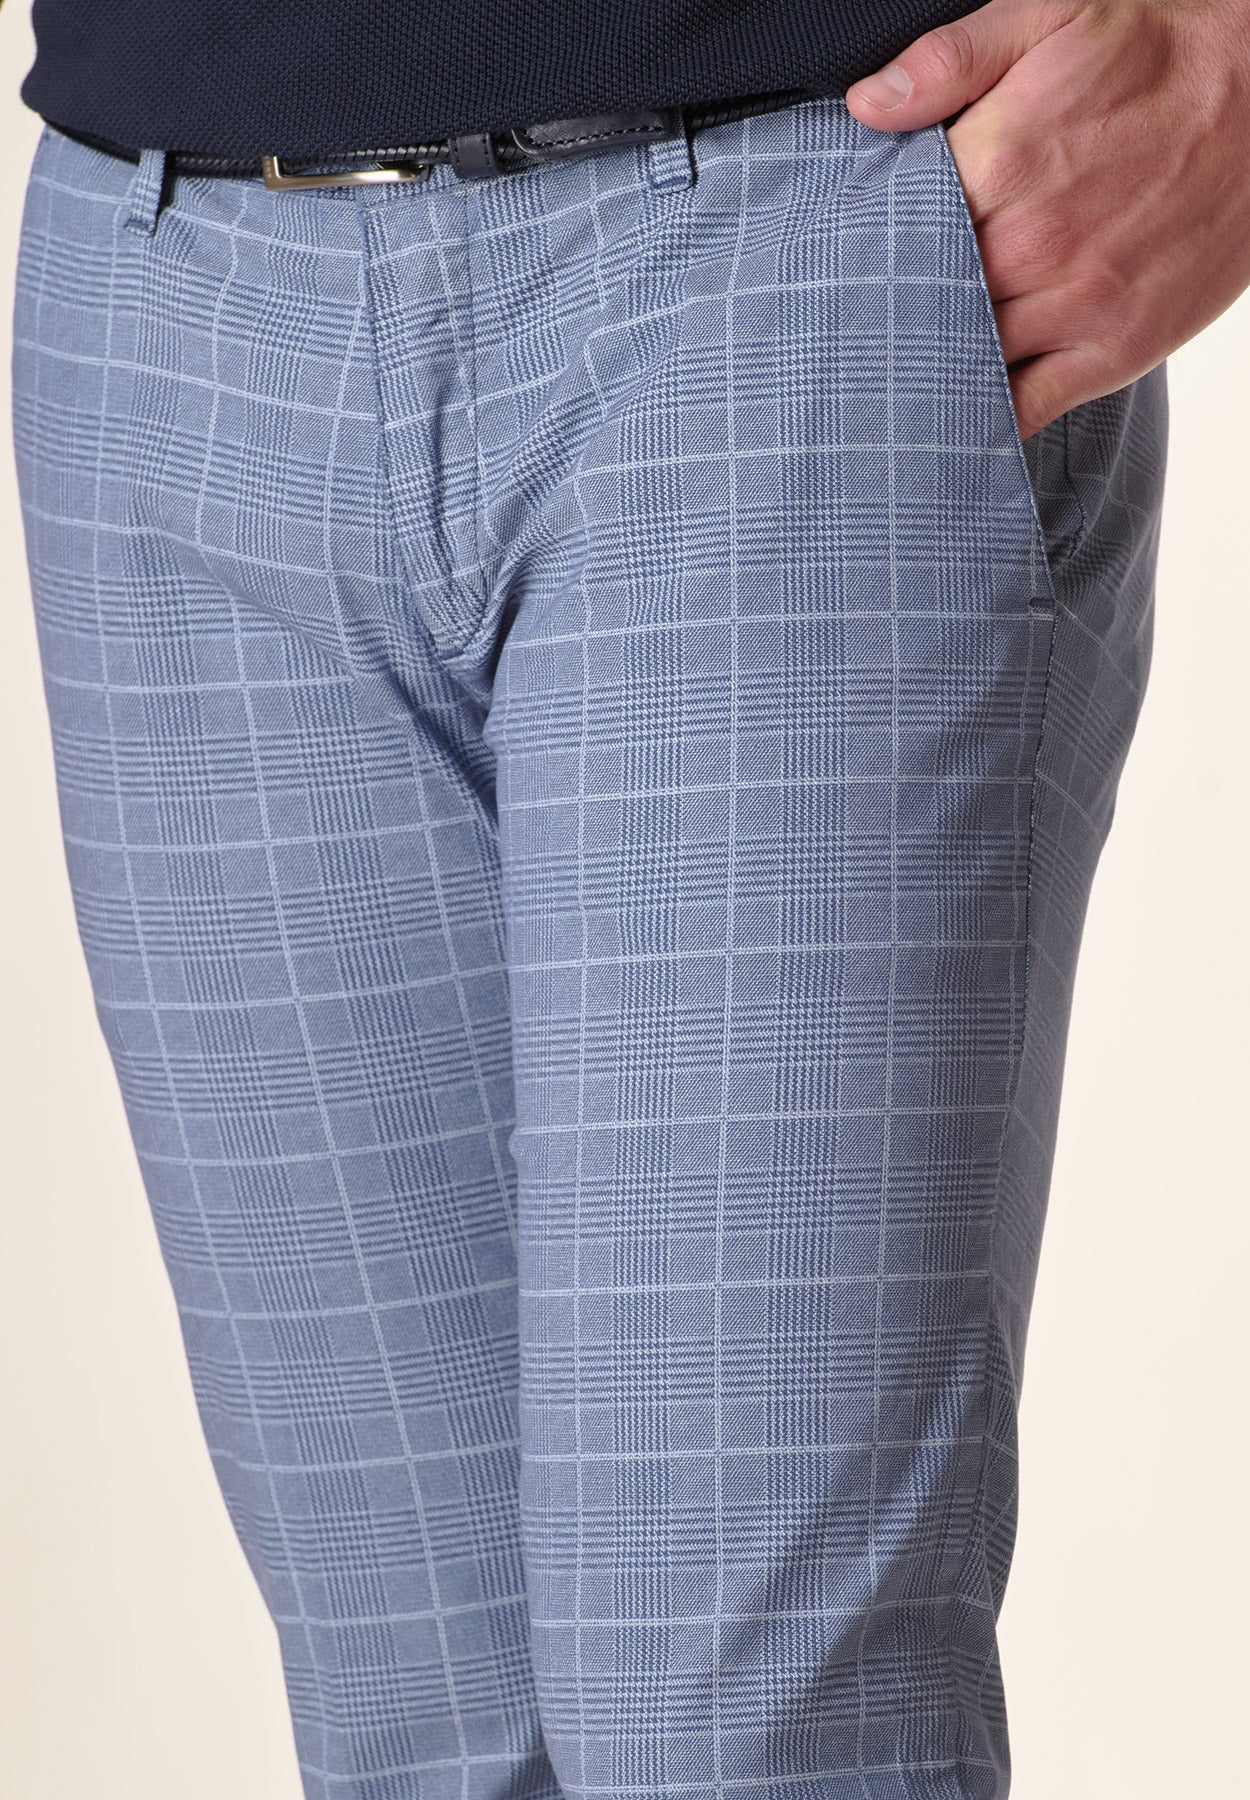 Pantalone indaco galles cotone stretch slim fit